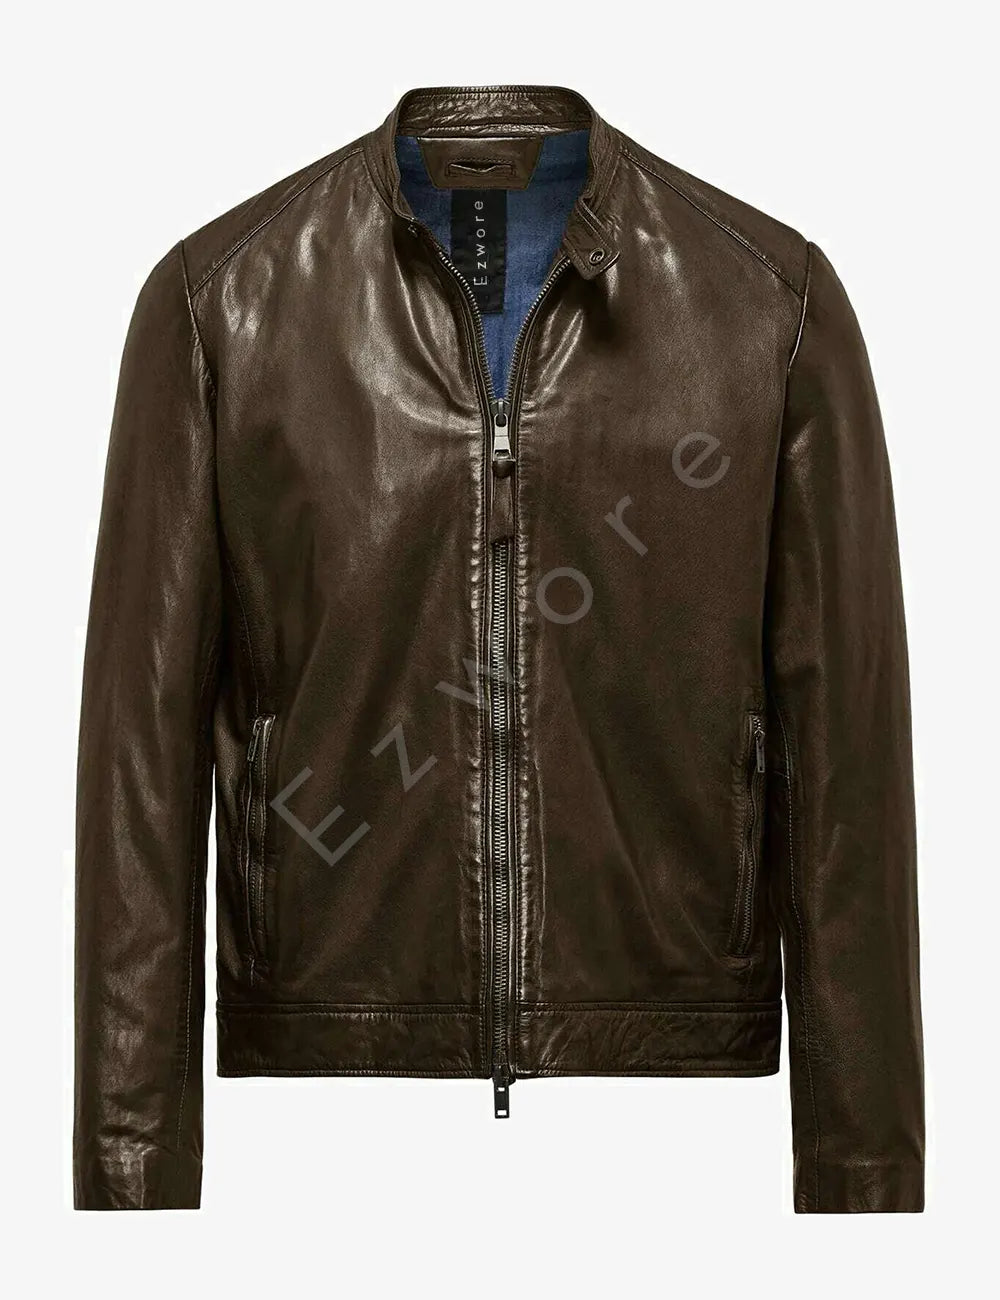 Brown Leather Jacket For Men